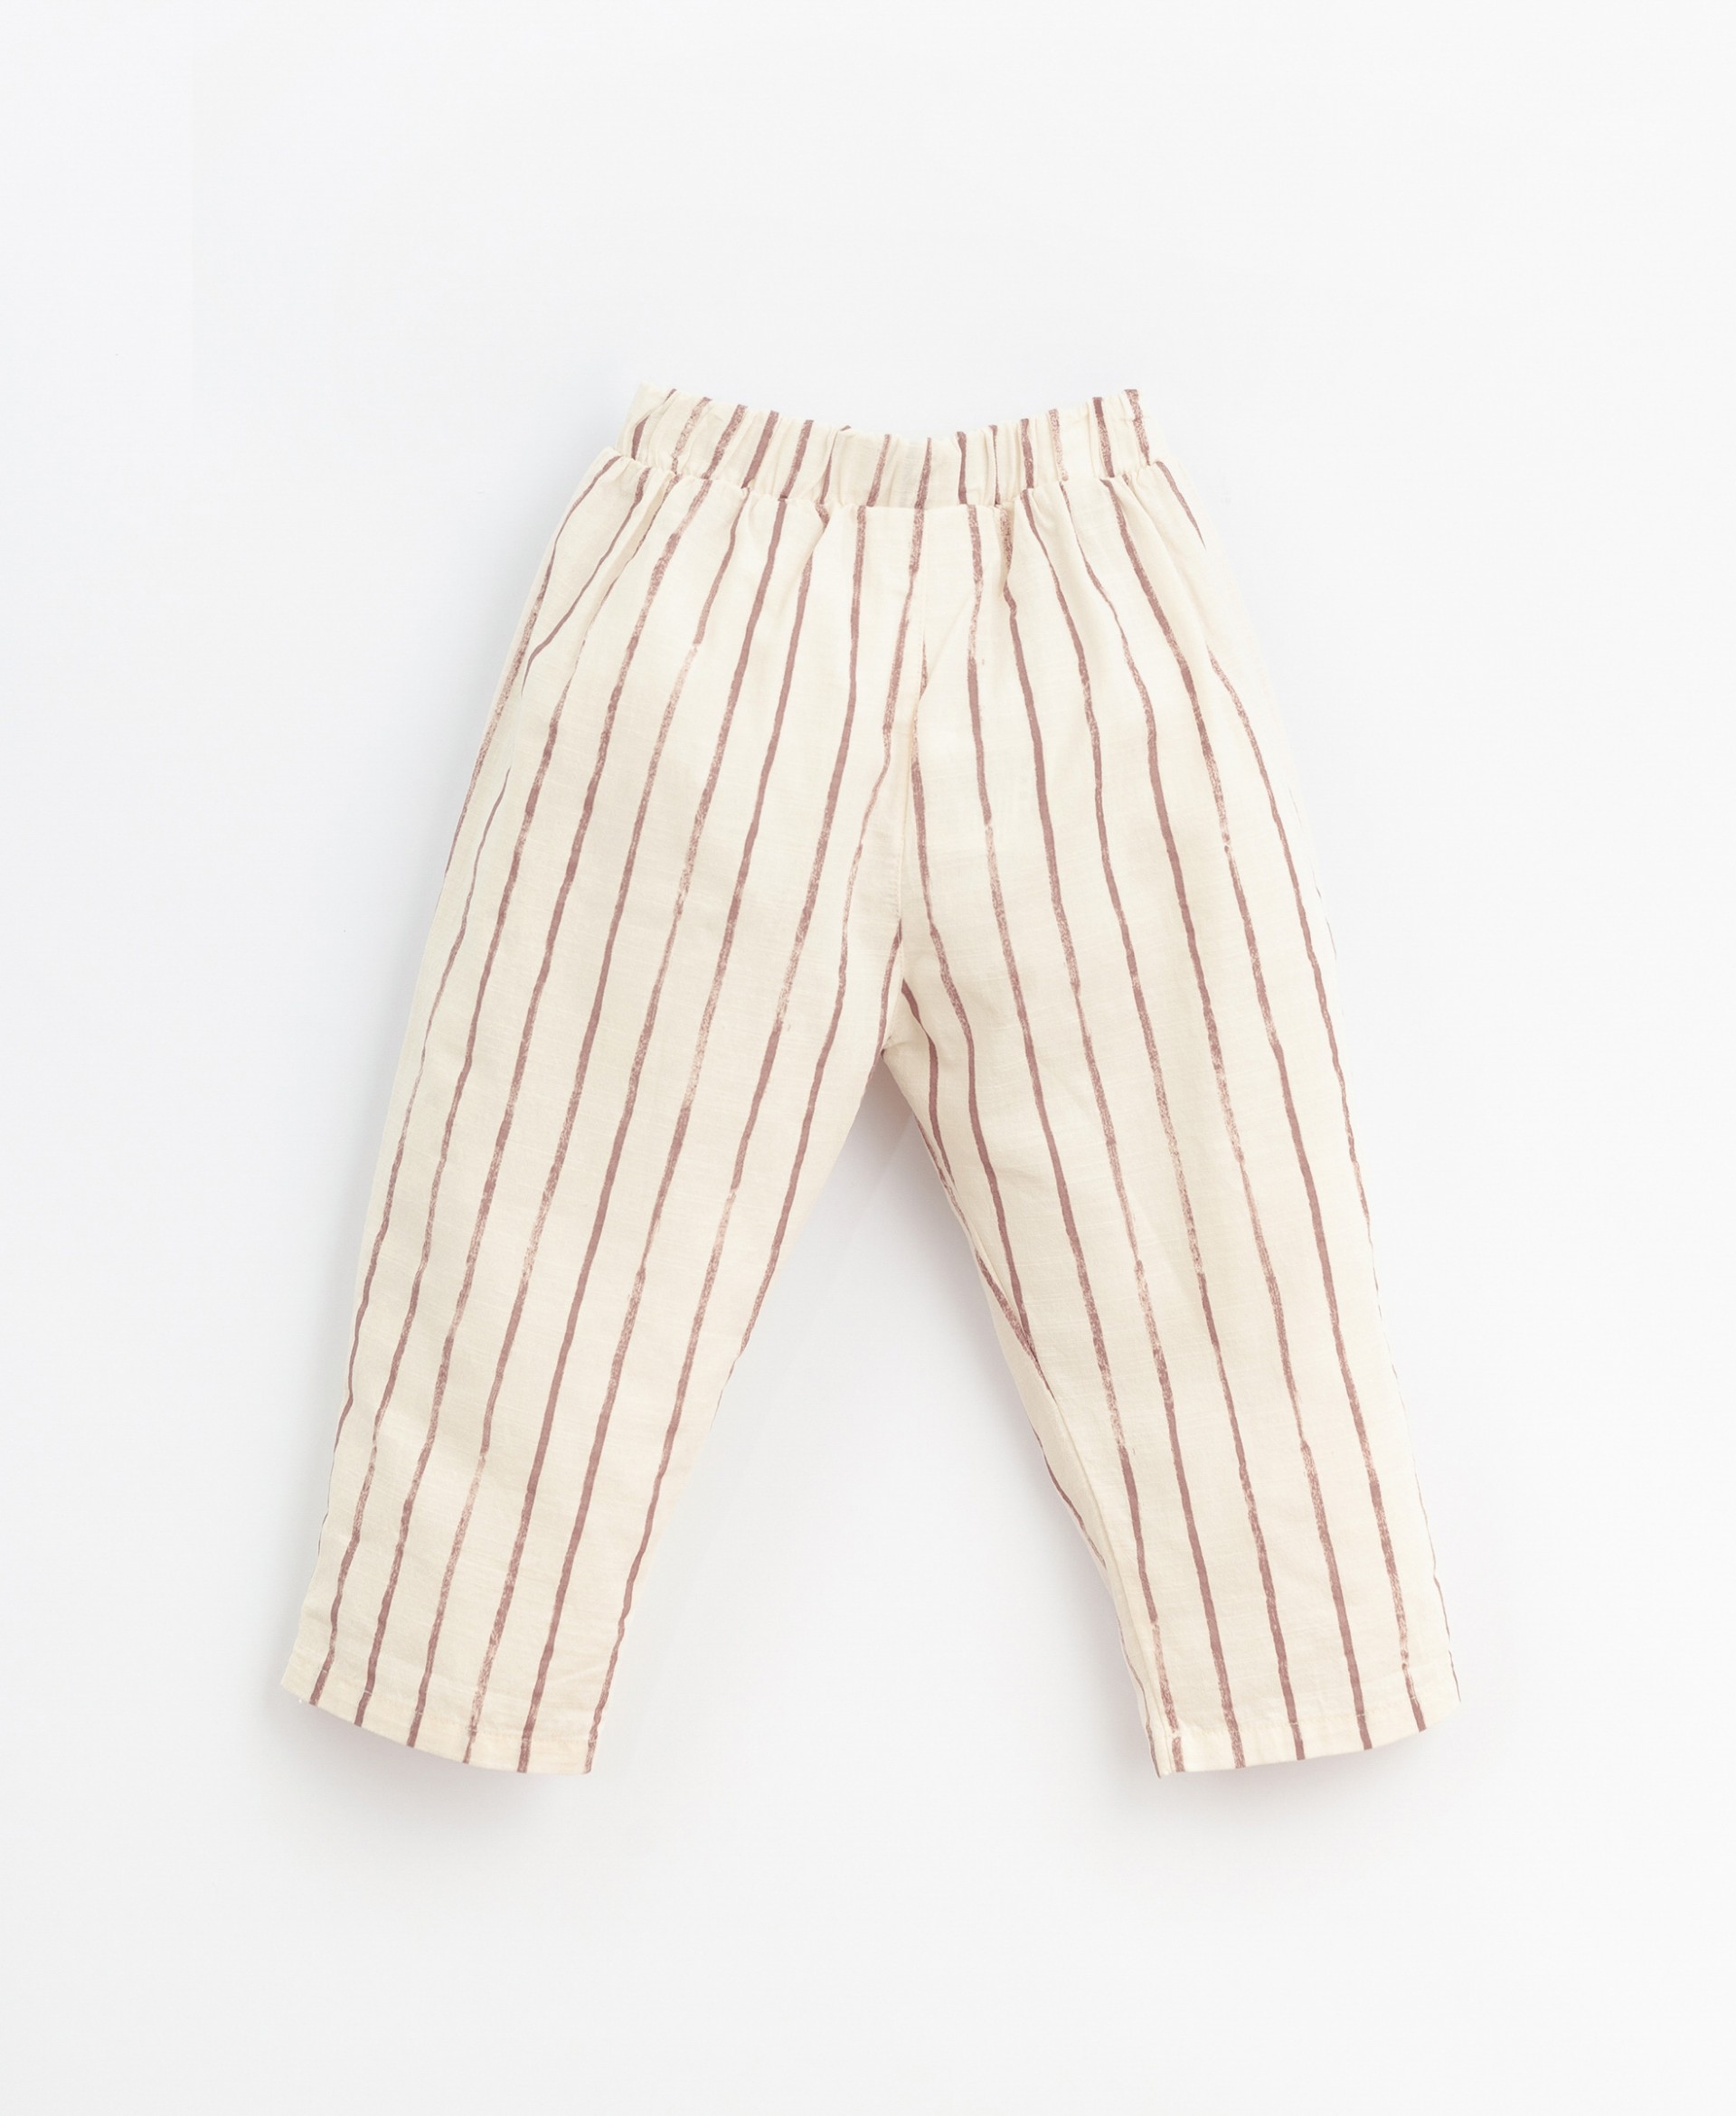 Pantalones de tela a rayas| Basketry